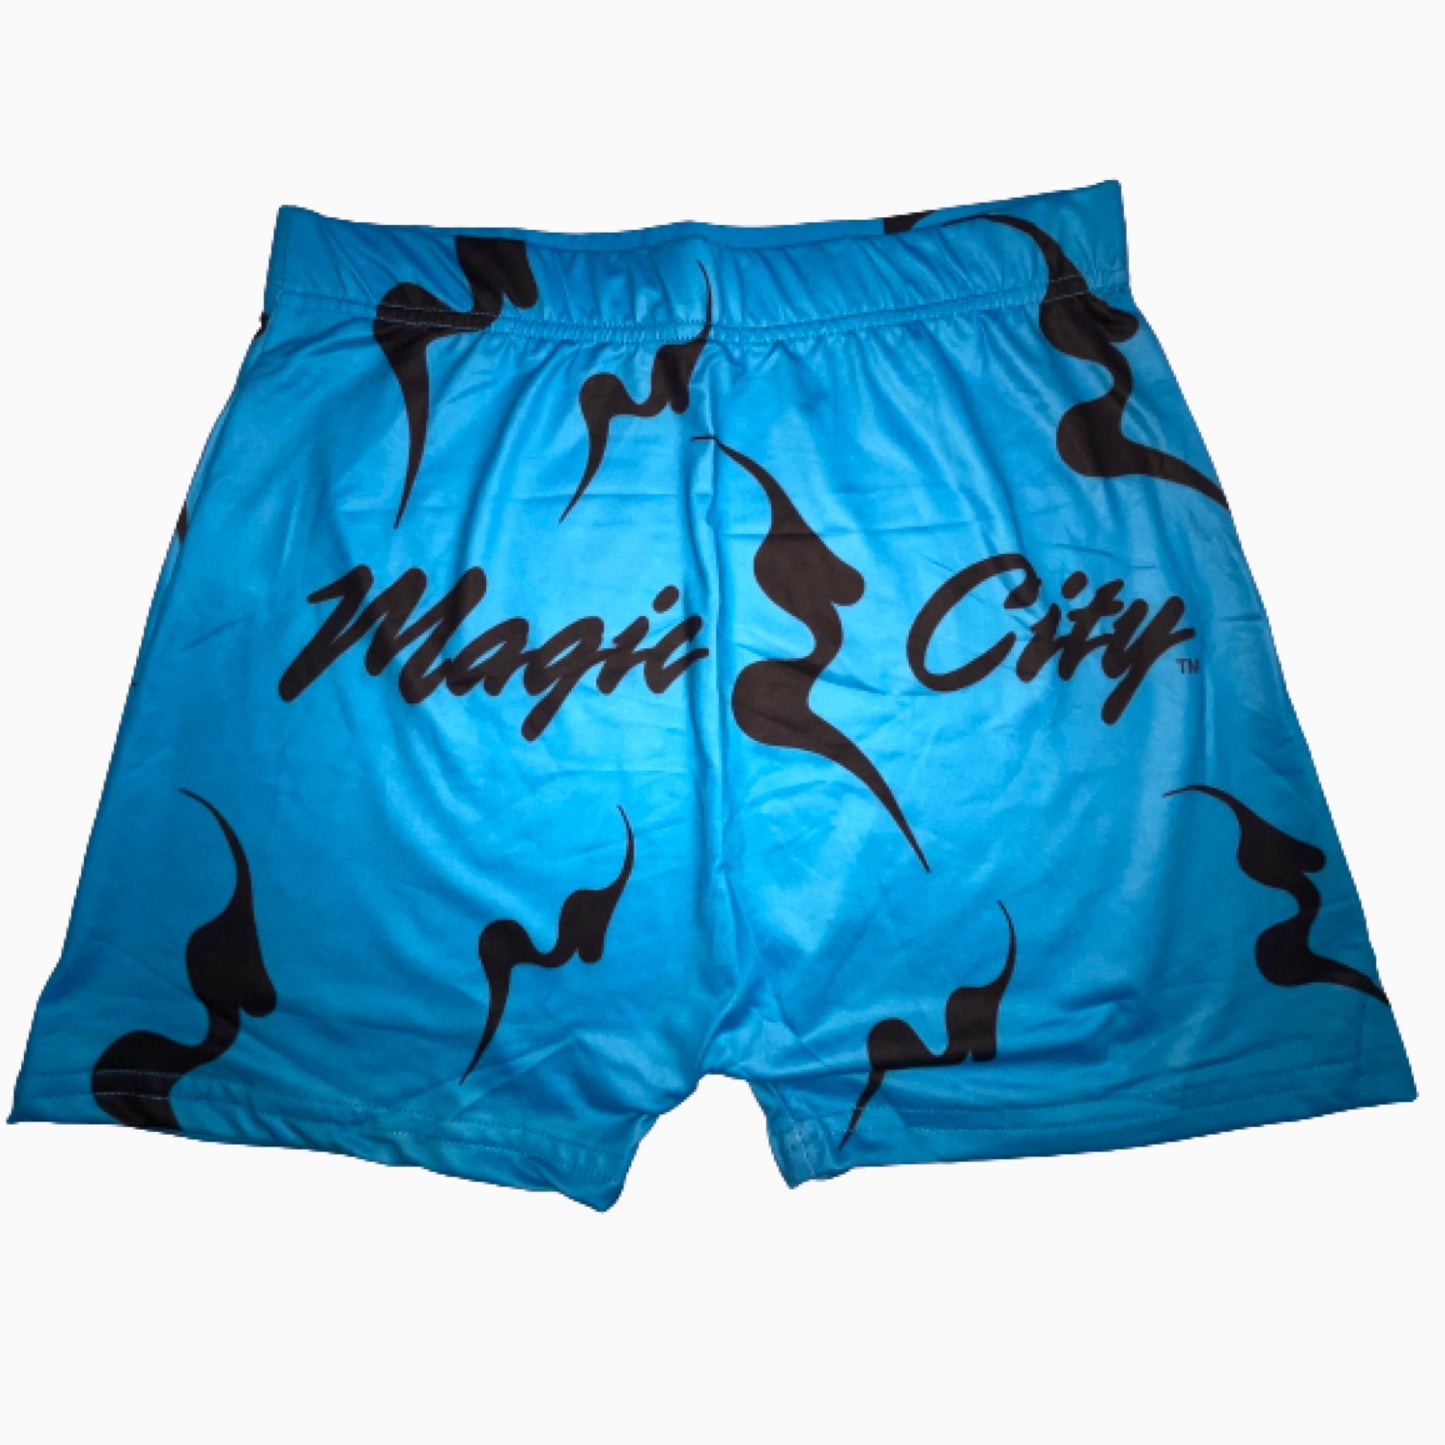 magic city edition shorts